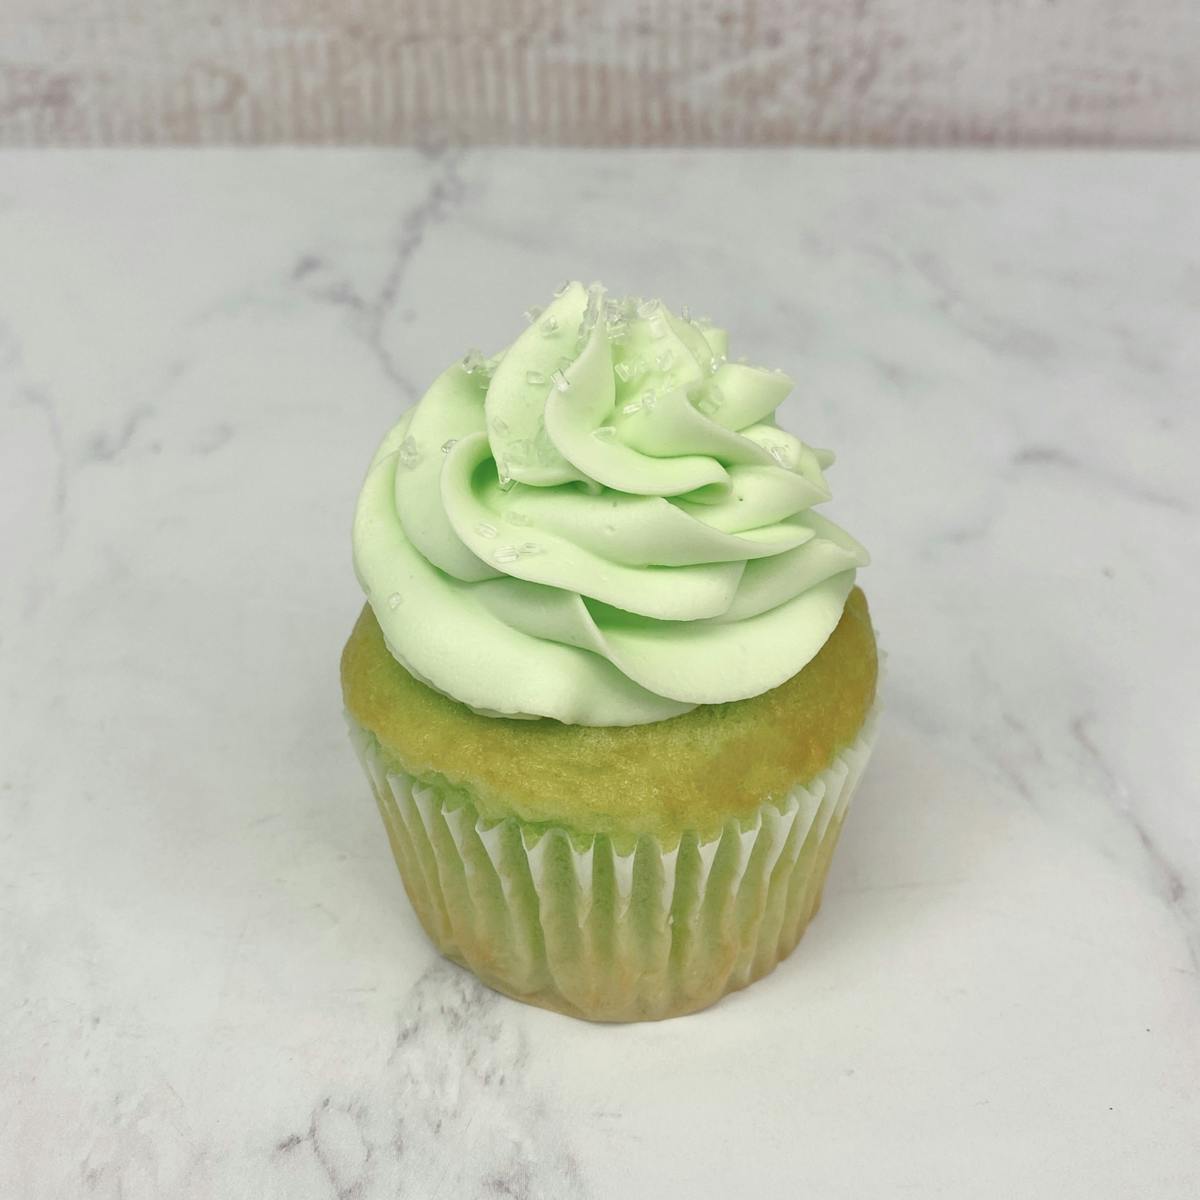 a green cupcake